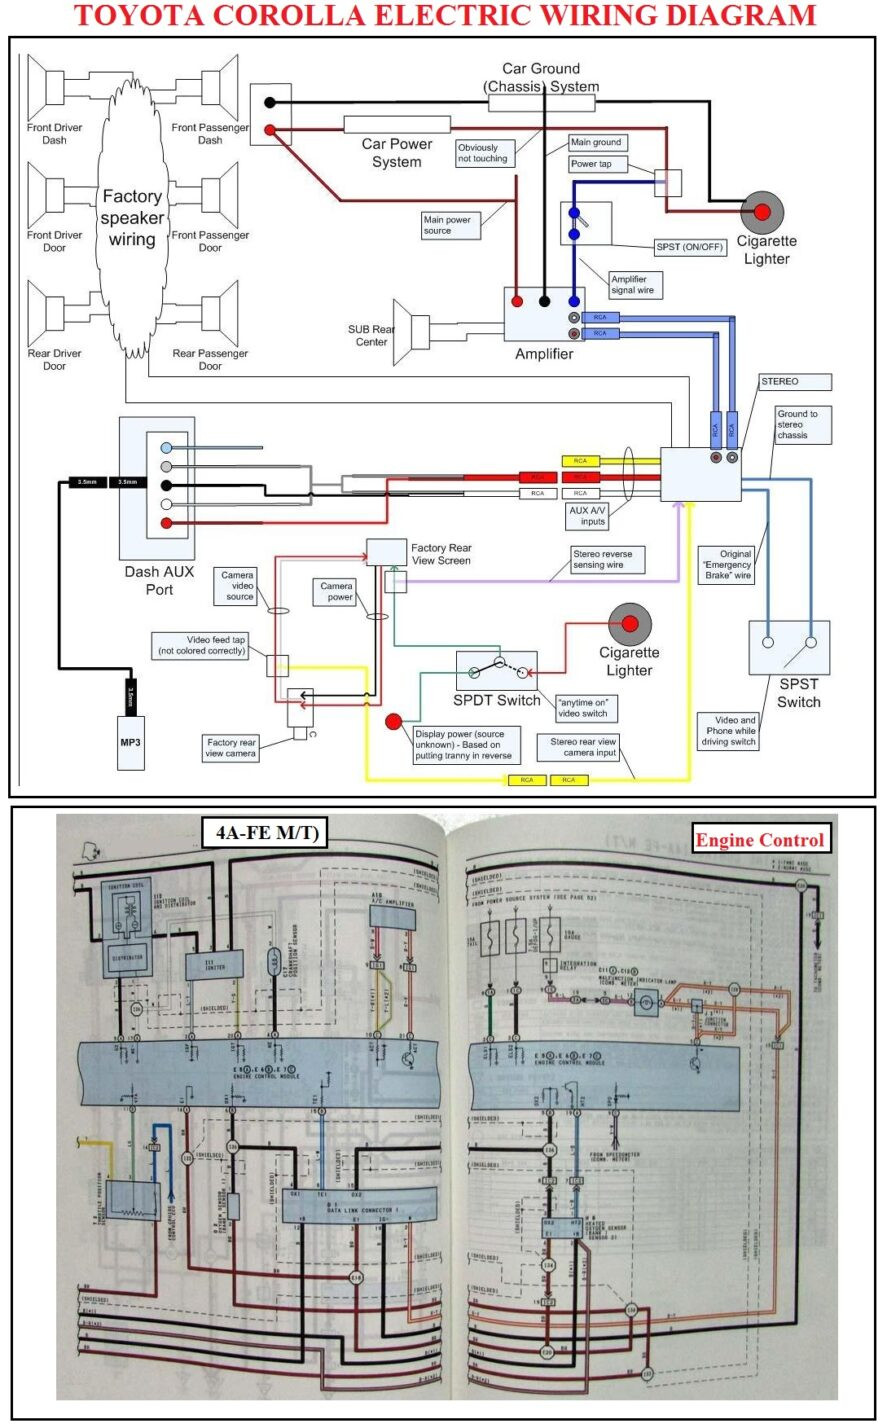 Toyota Electrical Wiring Diagram New toyota Corolla Wiring Diagram Car Construction